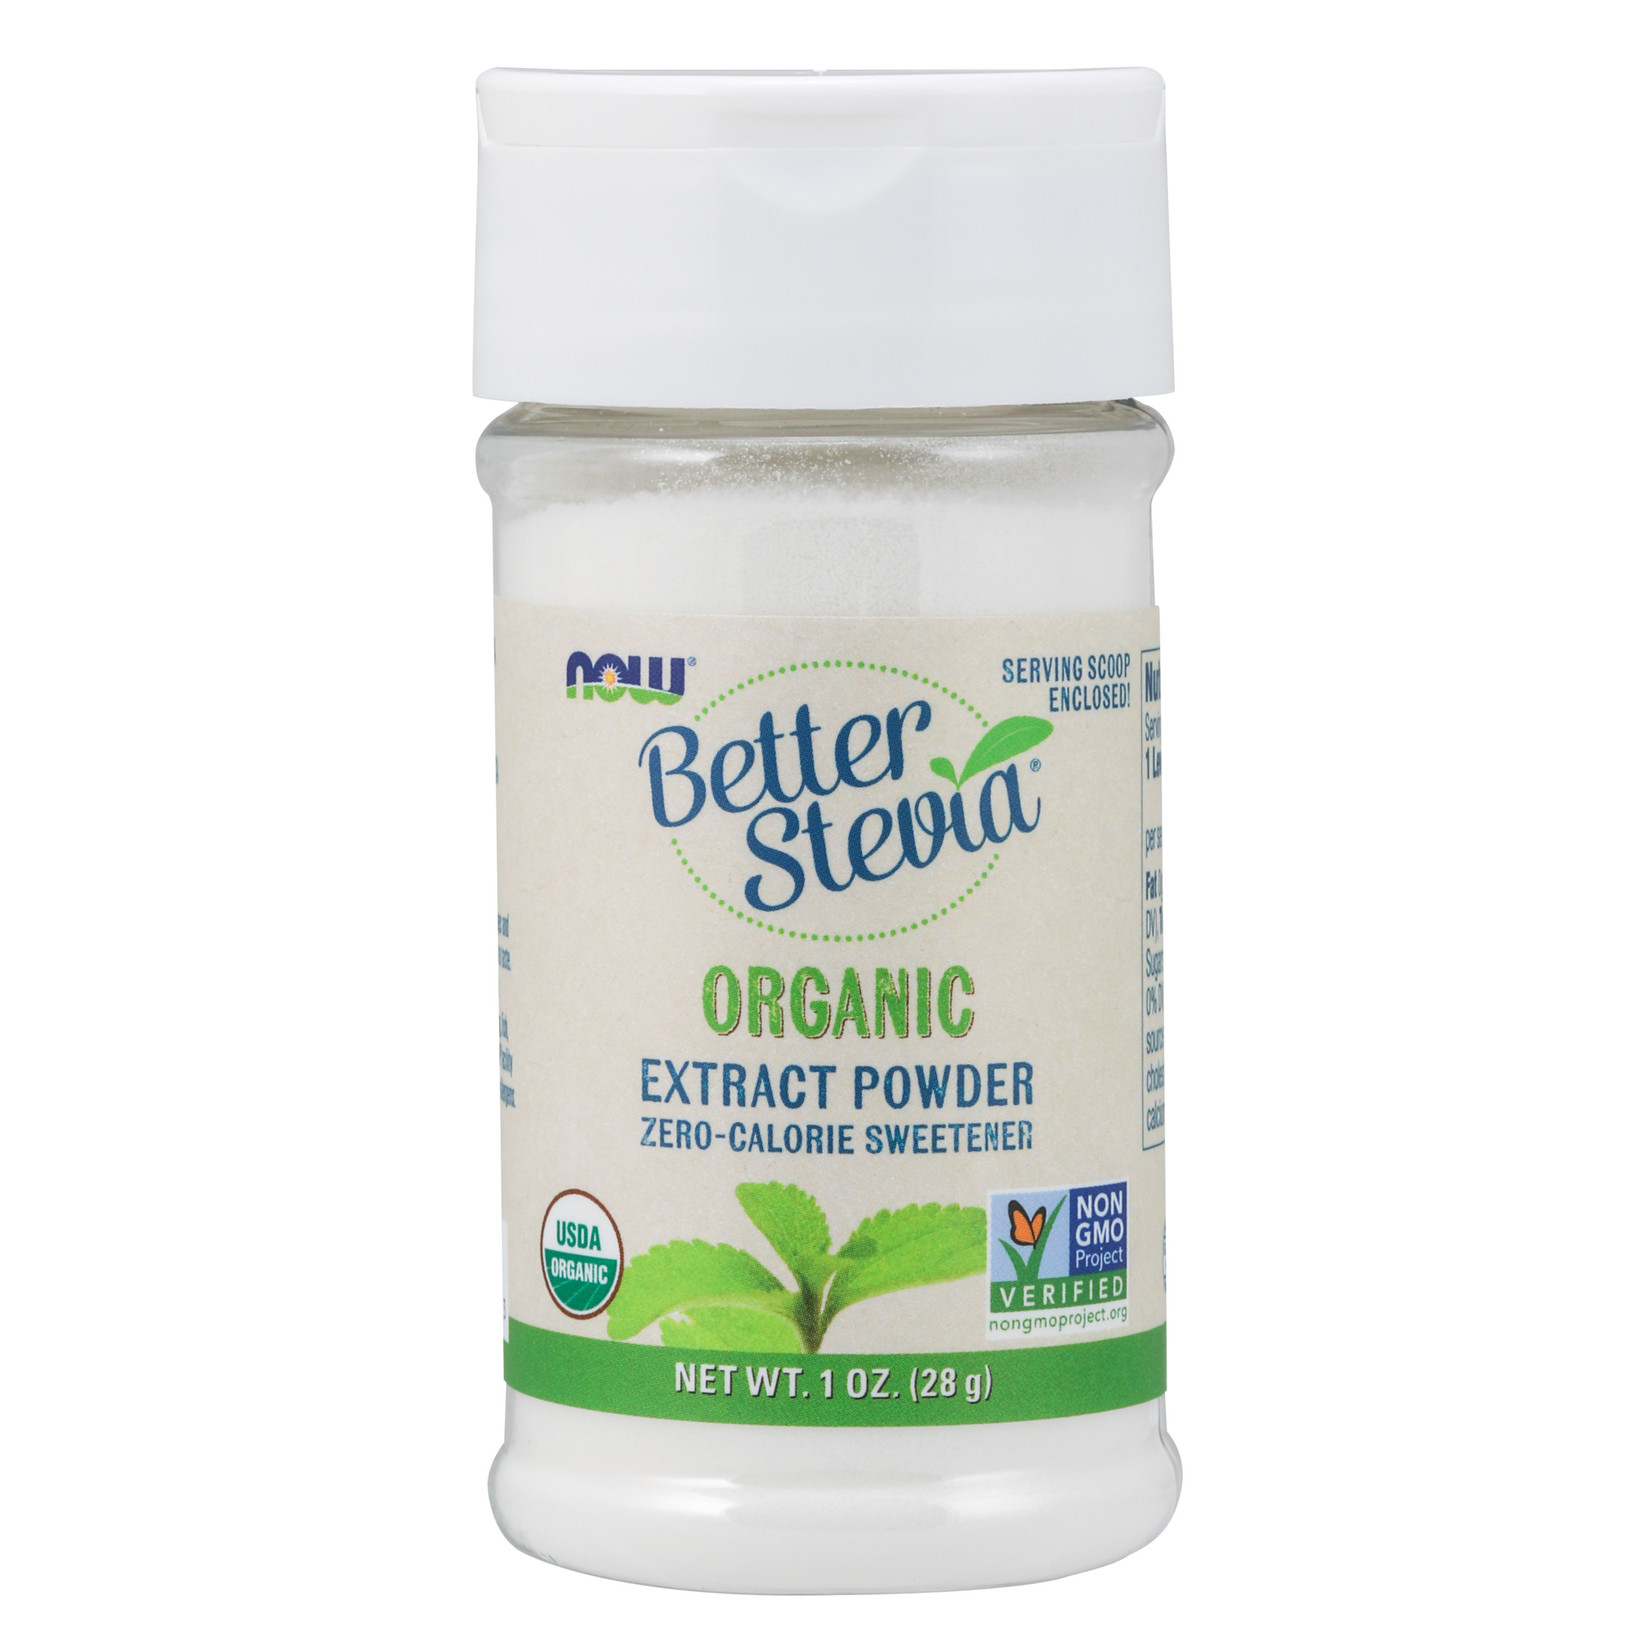 Now Now - Better Stevia Powder Organic - 1 oz